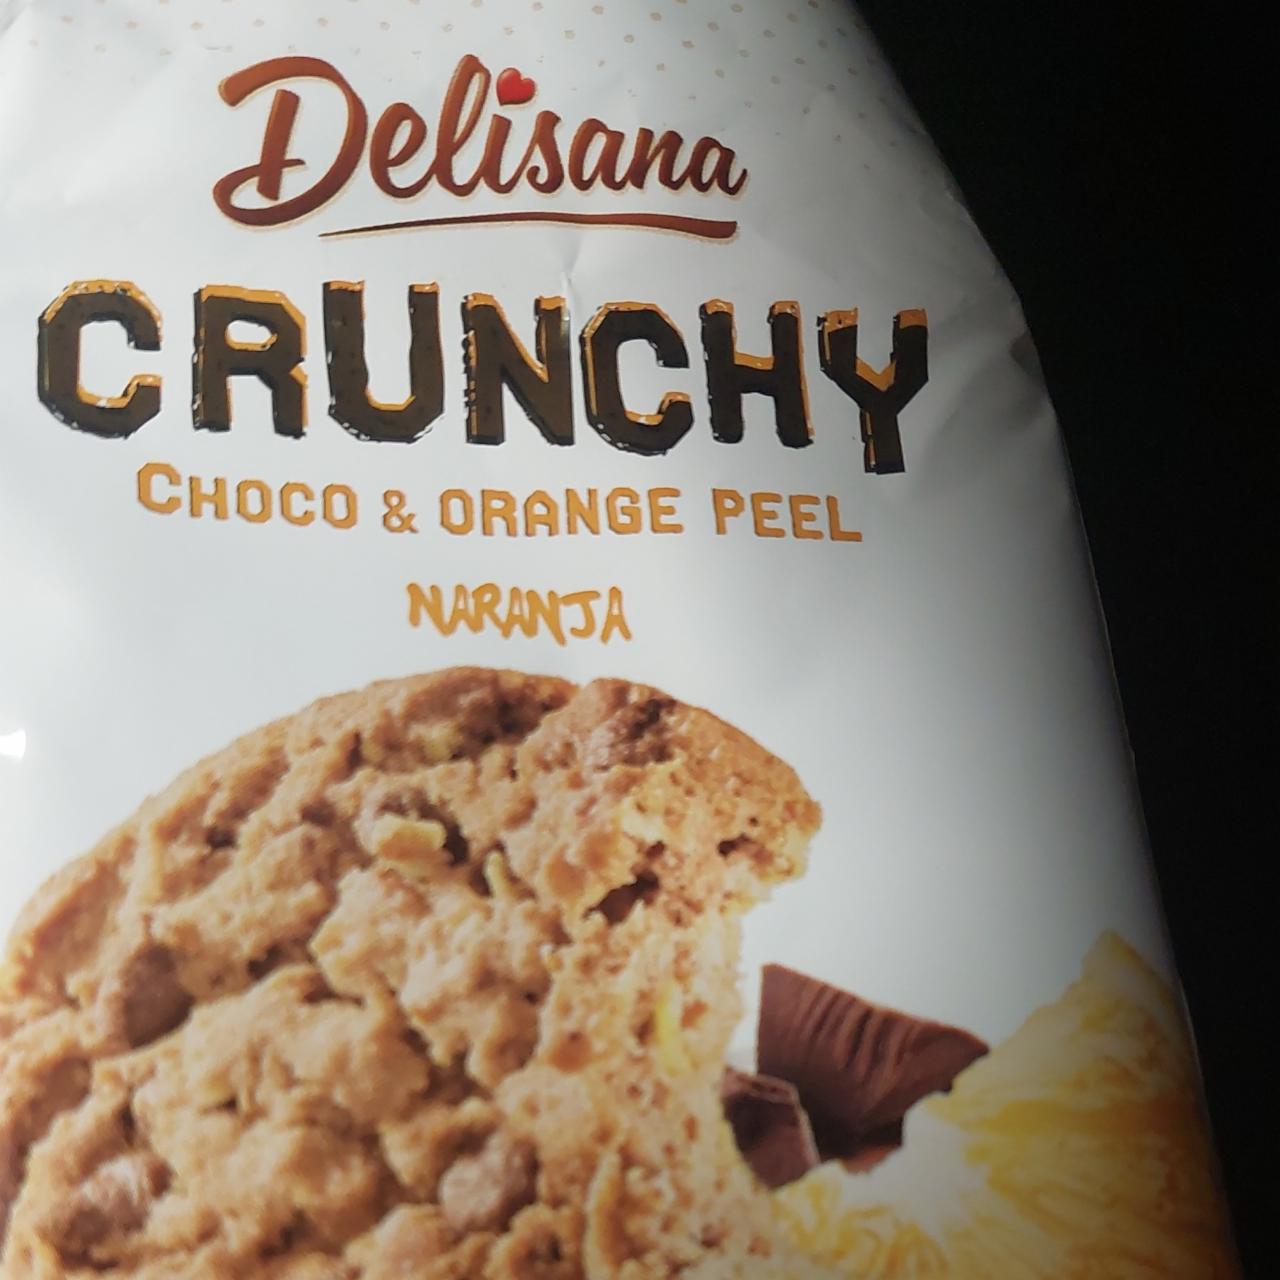 Képek - Crunchy choco&orange peel naranja Delisana